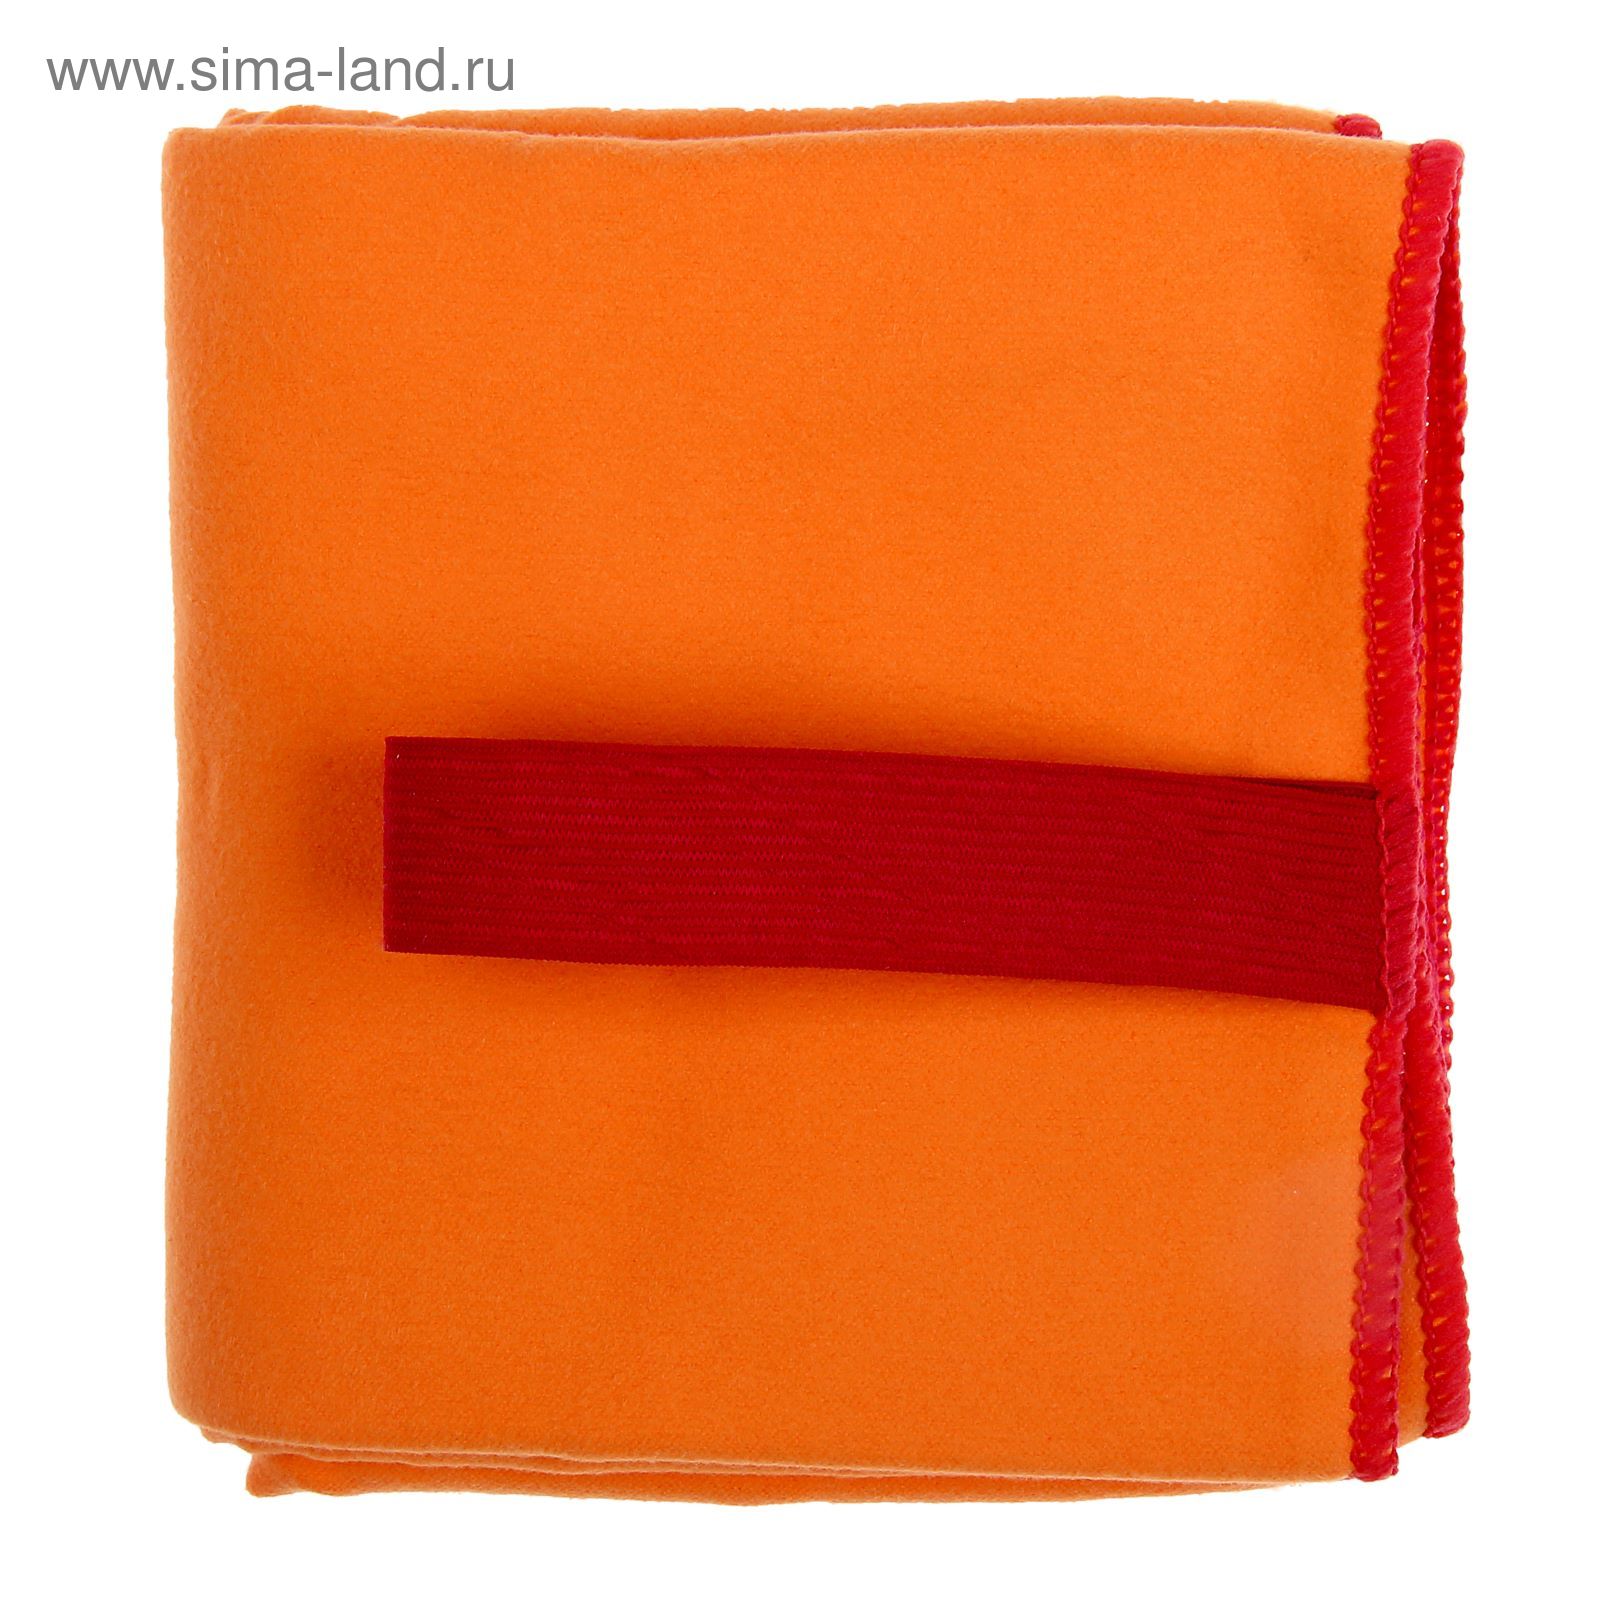 Спортивное полотенце ONLITOP, размер 40х55 см (вид 2), оранжевый, 200 г/м2